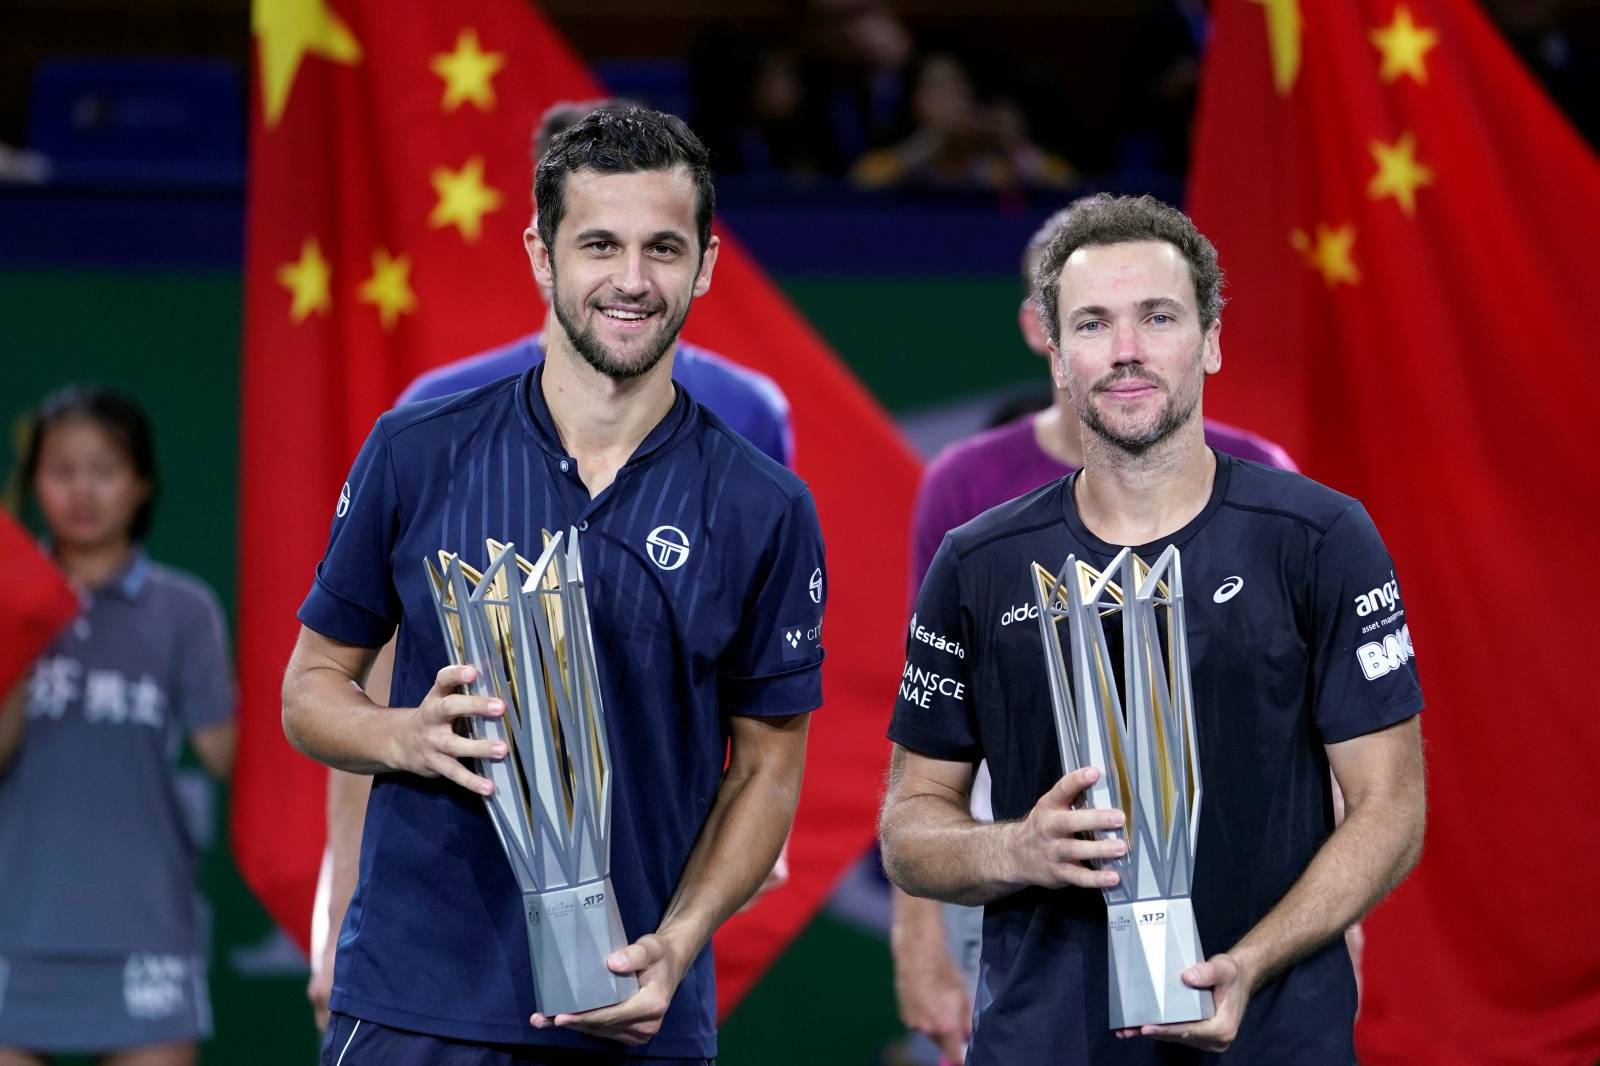 Tennis - Shanghai Masters - Men's Doubles